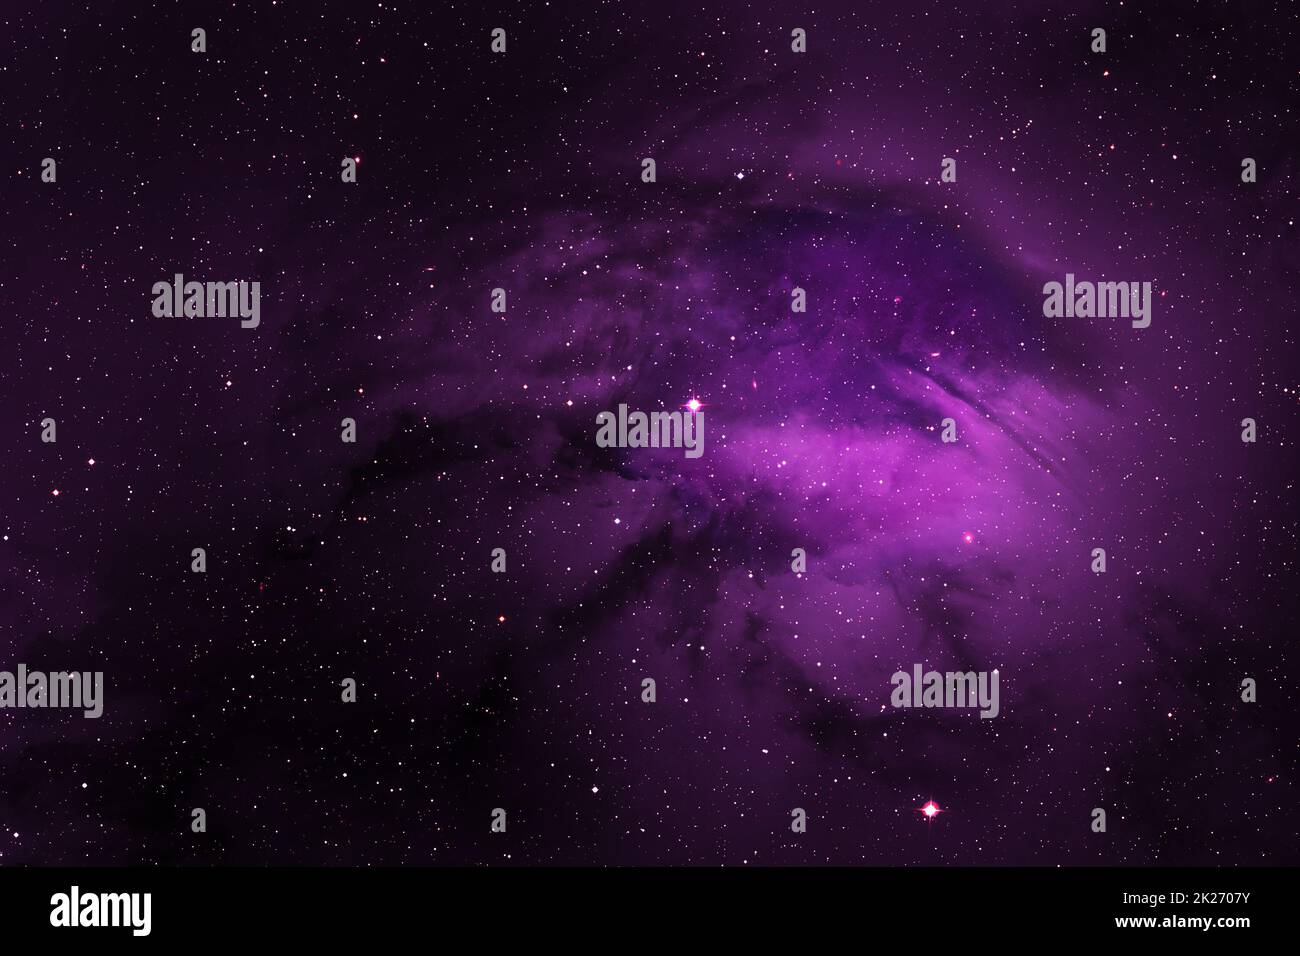 Night sky Wallpaper 4K, Colorful, Magic, Stars, Milky Way